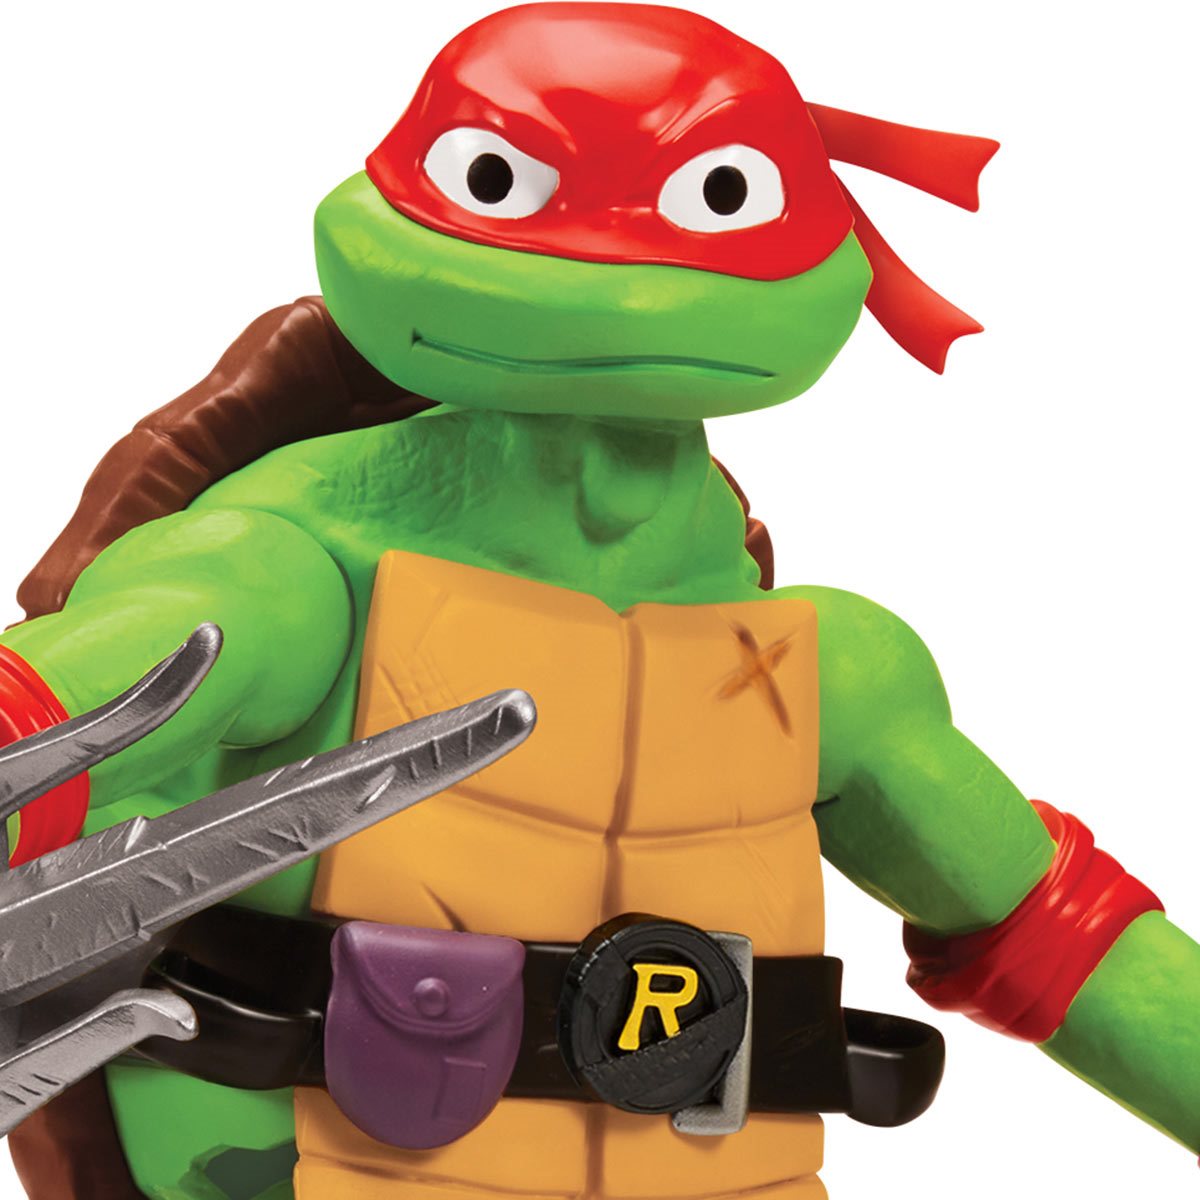 Raph Teenage Mutant Ninja Turtles Mutant Mayhem Shirt